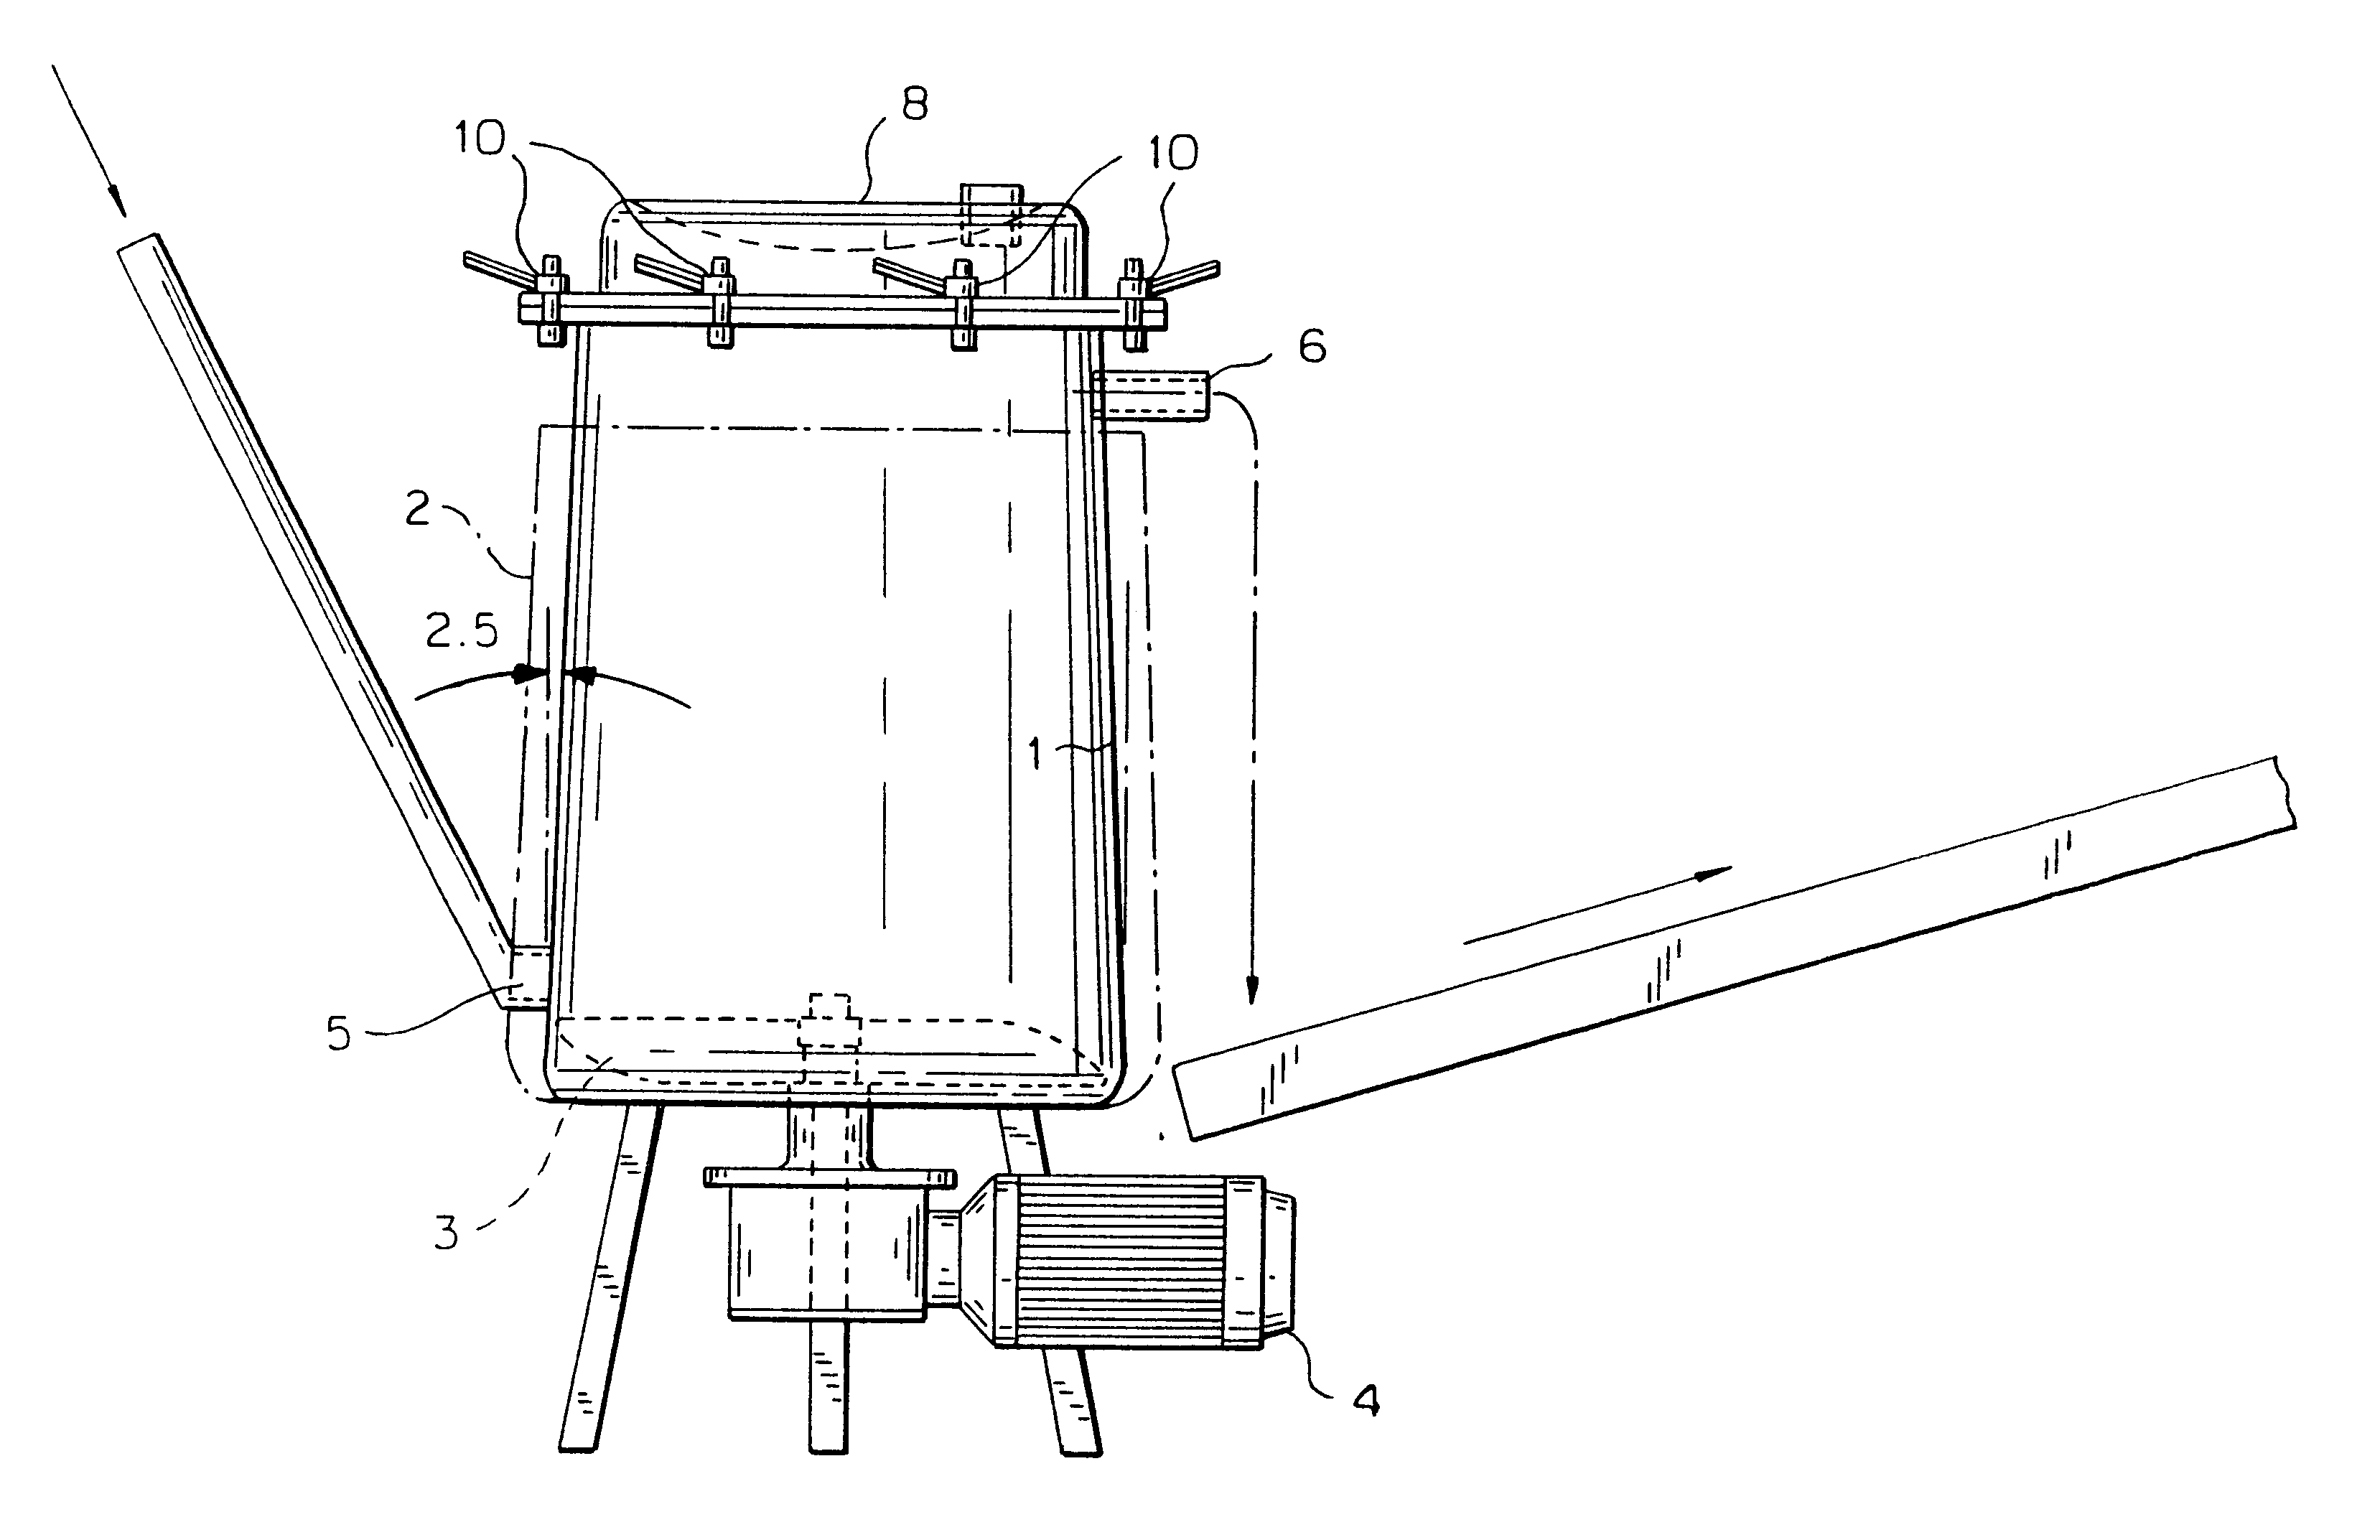 Drying apparatus